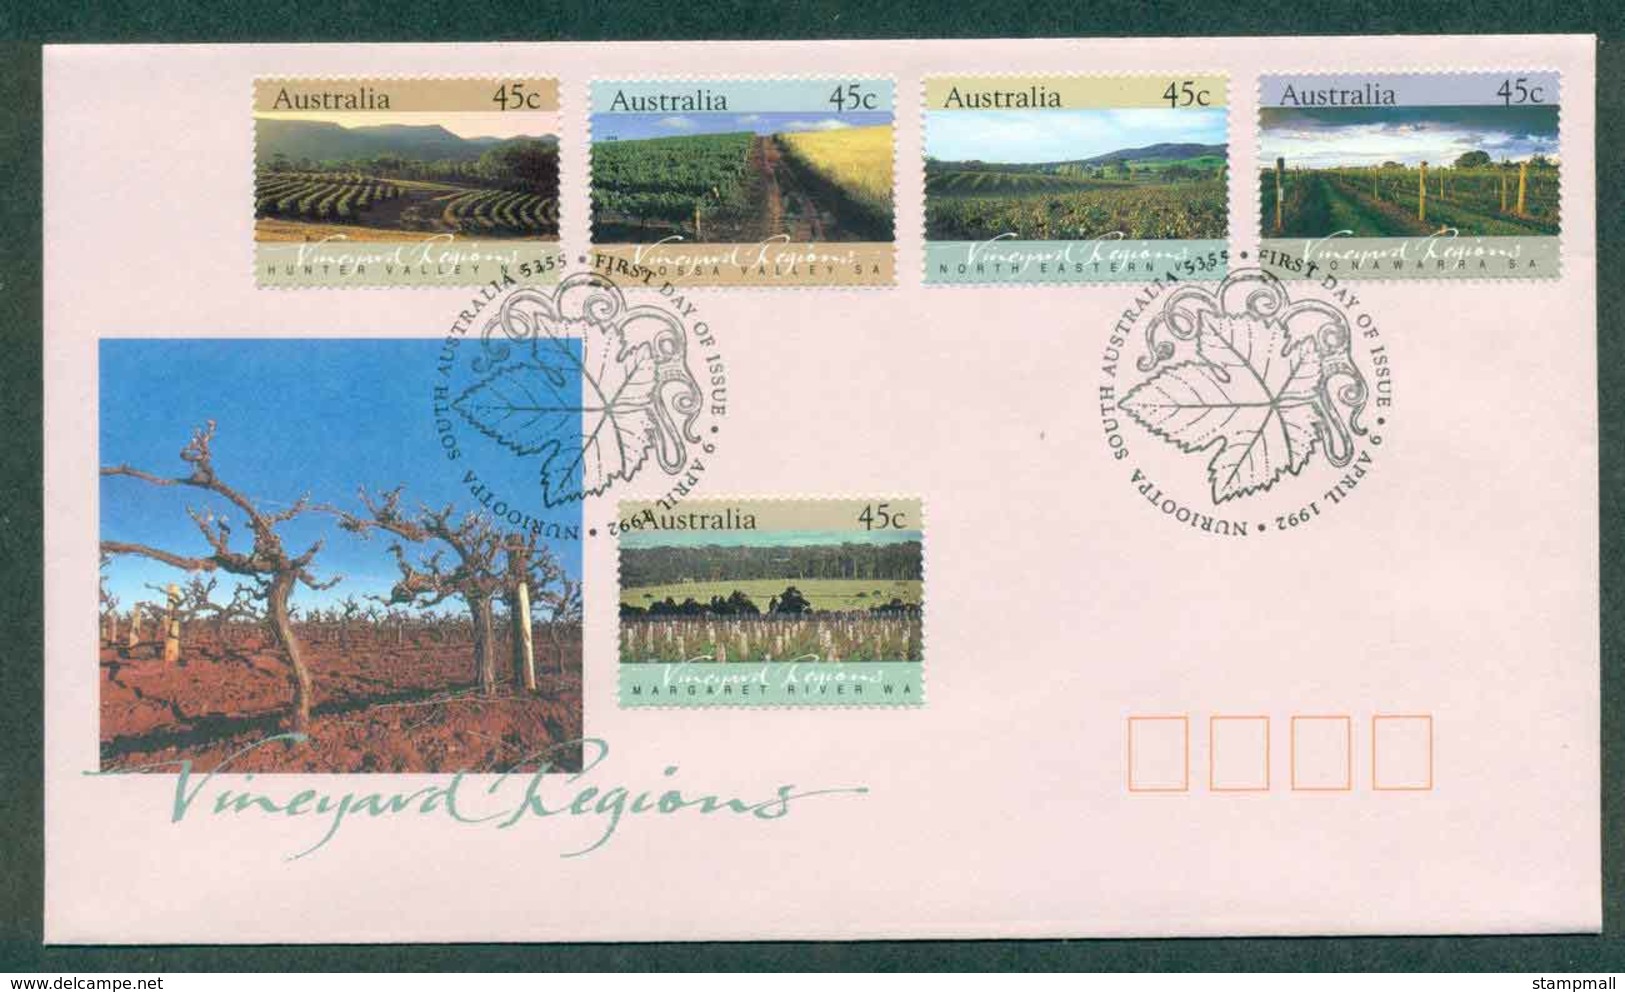 Australia 1992 Vineyard Regions, Nurioopta FDC Lot51077 - Covers & Documents